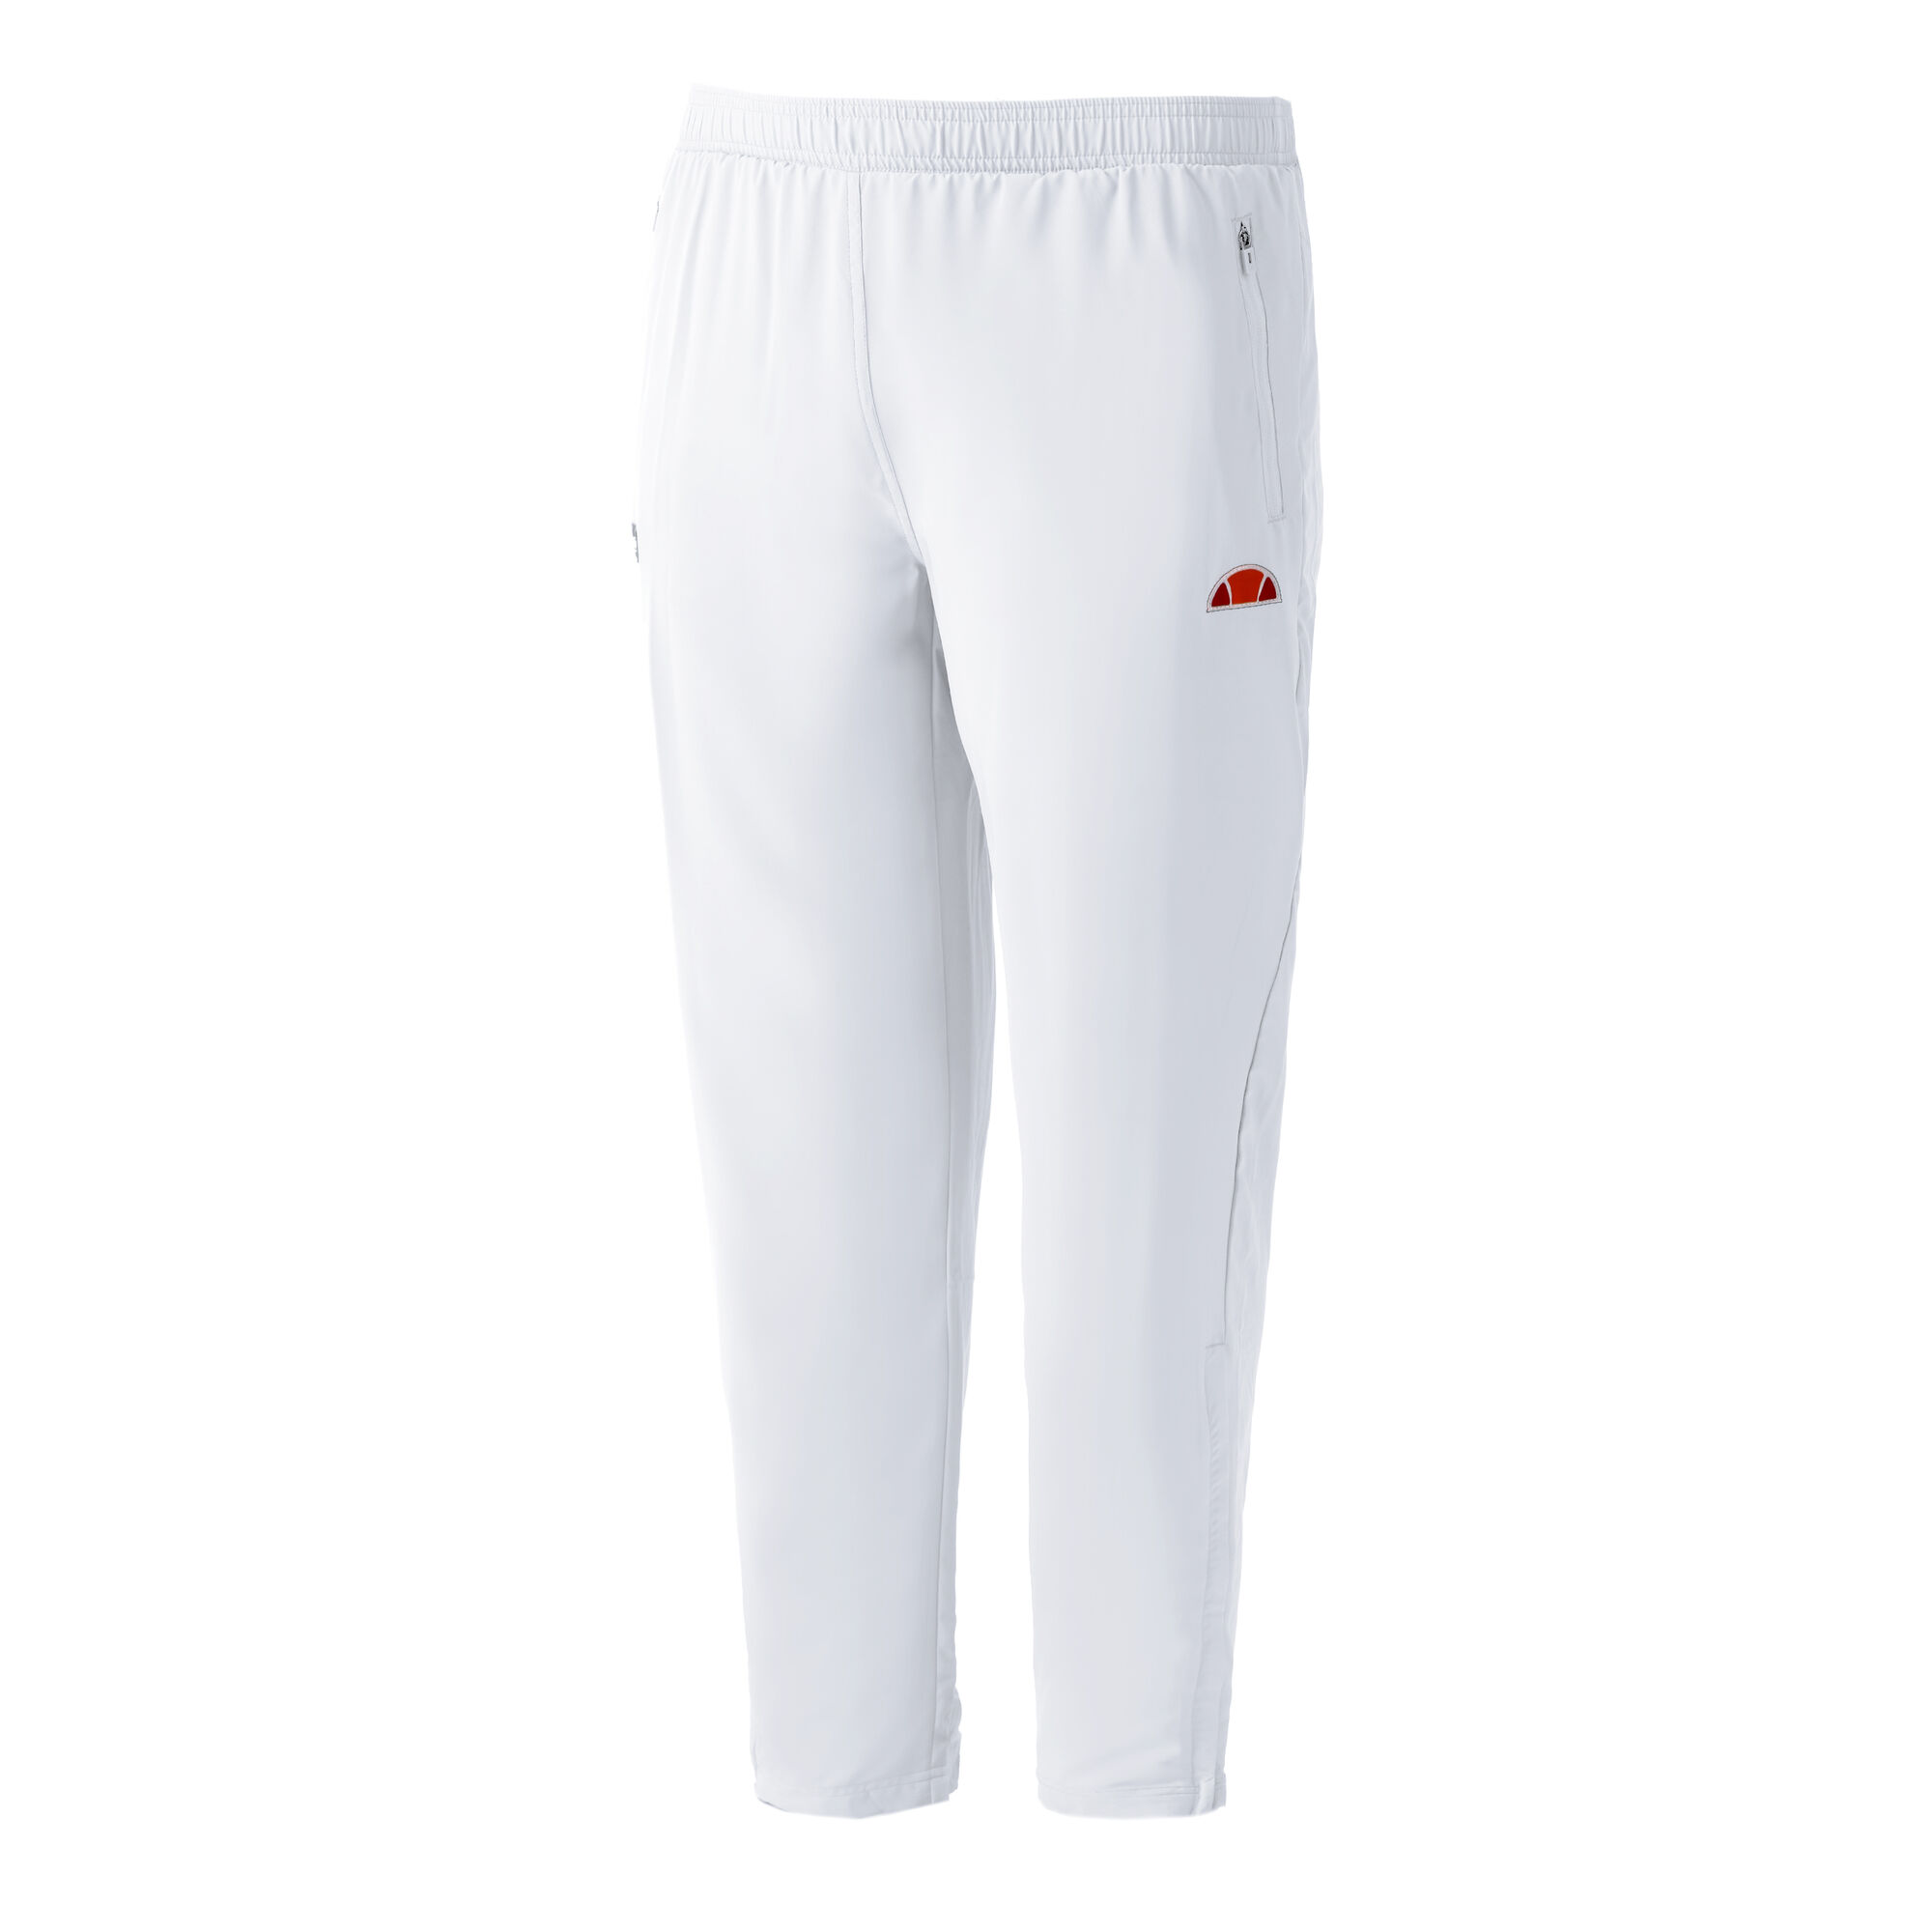 kan zijn specificeren overdracht buy Ellesse Major Track Training Pants Men - White, Multicoloured online |  Tennis-Point